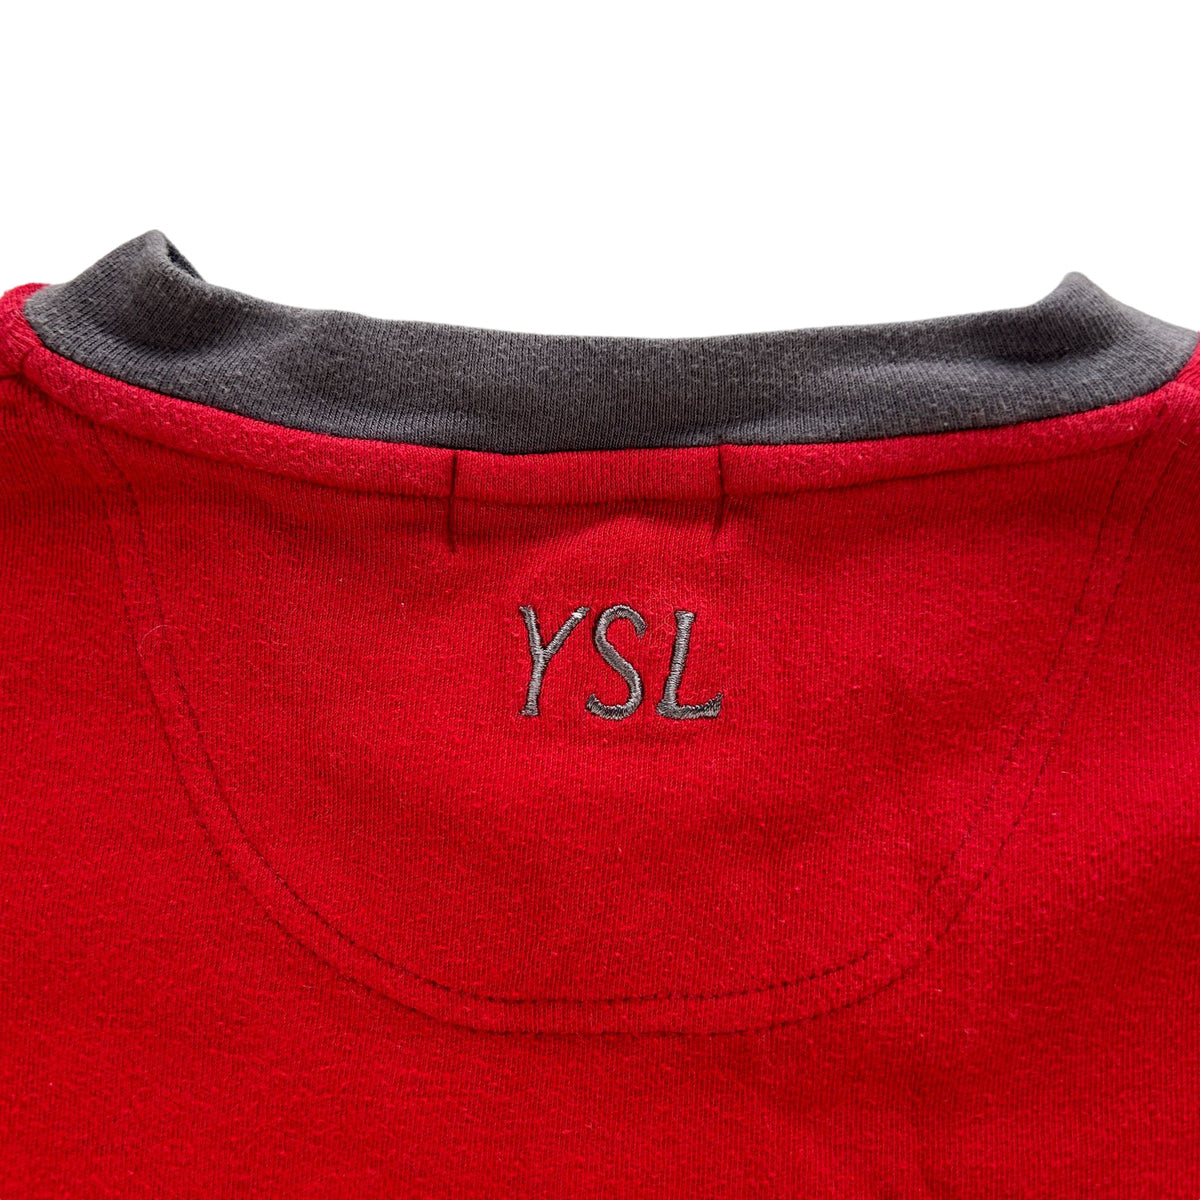 Vintage YSL Yves Saint Laurent Jumper Size M